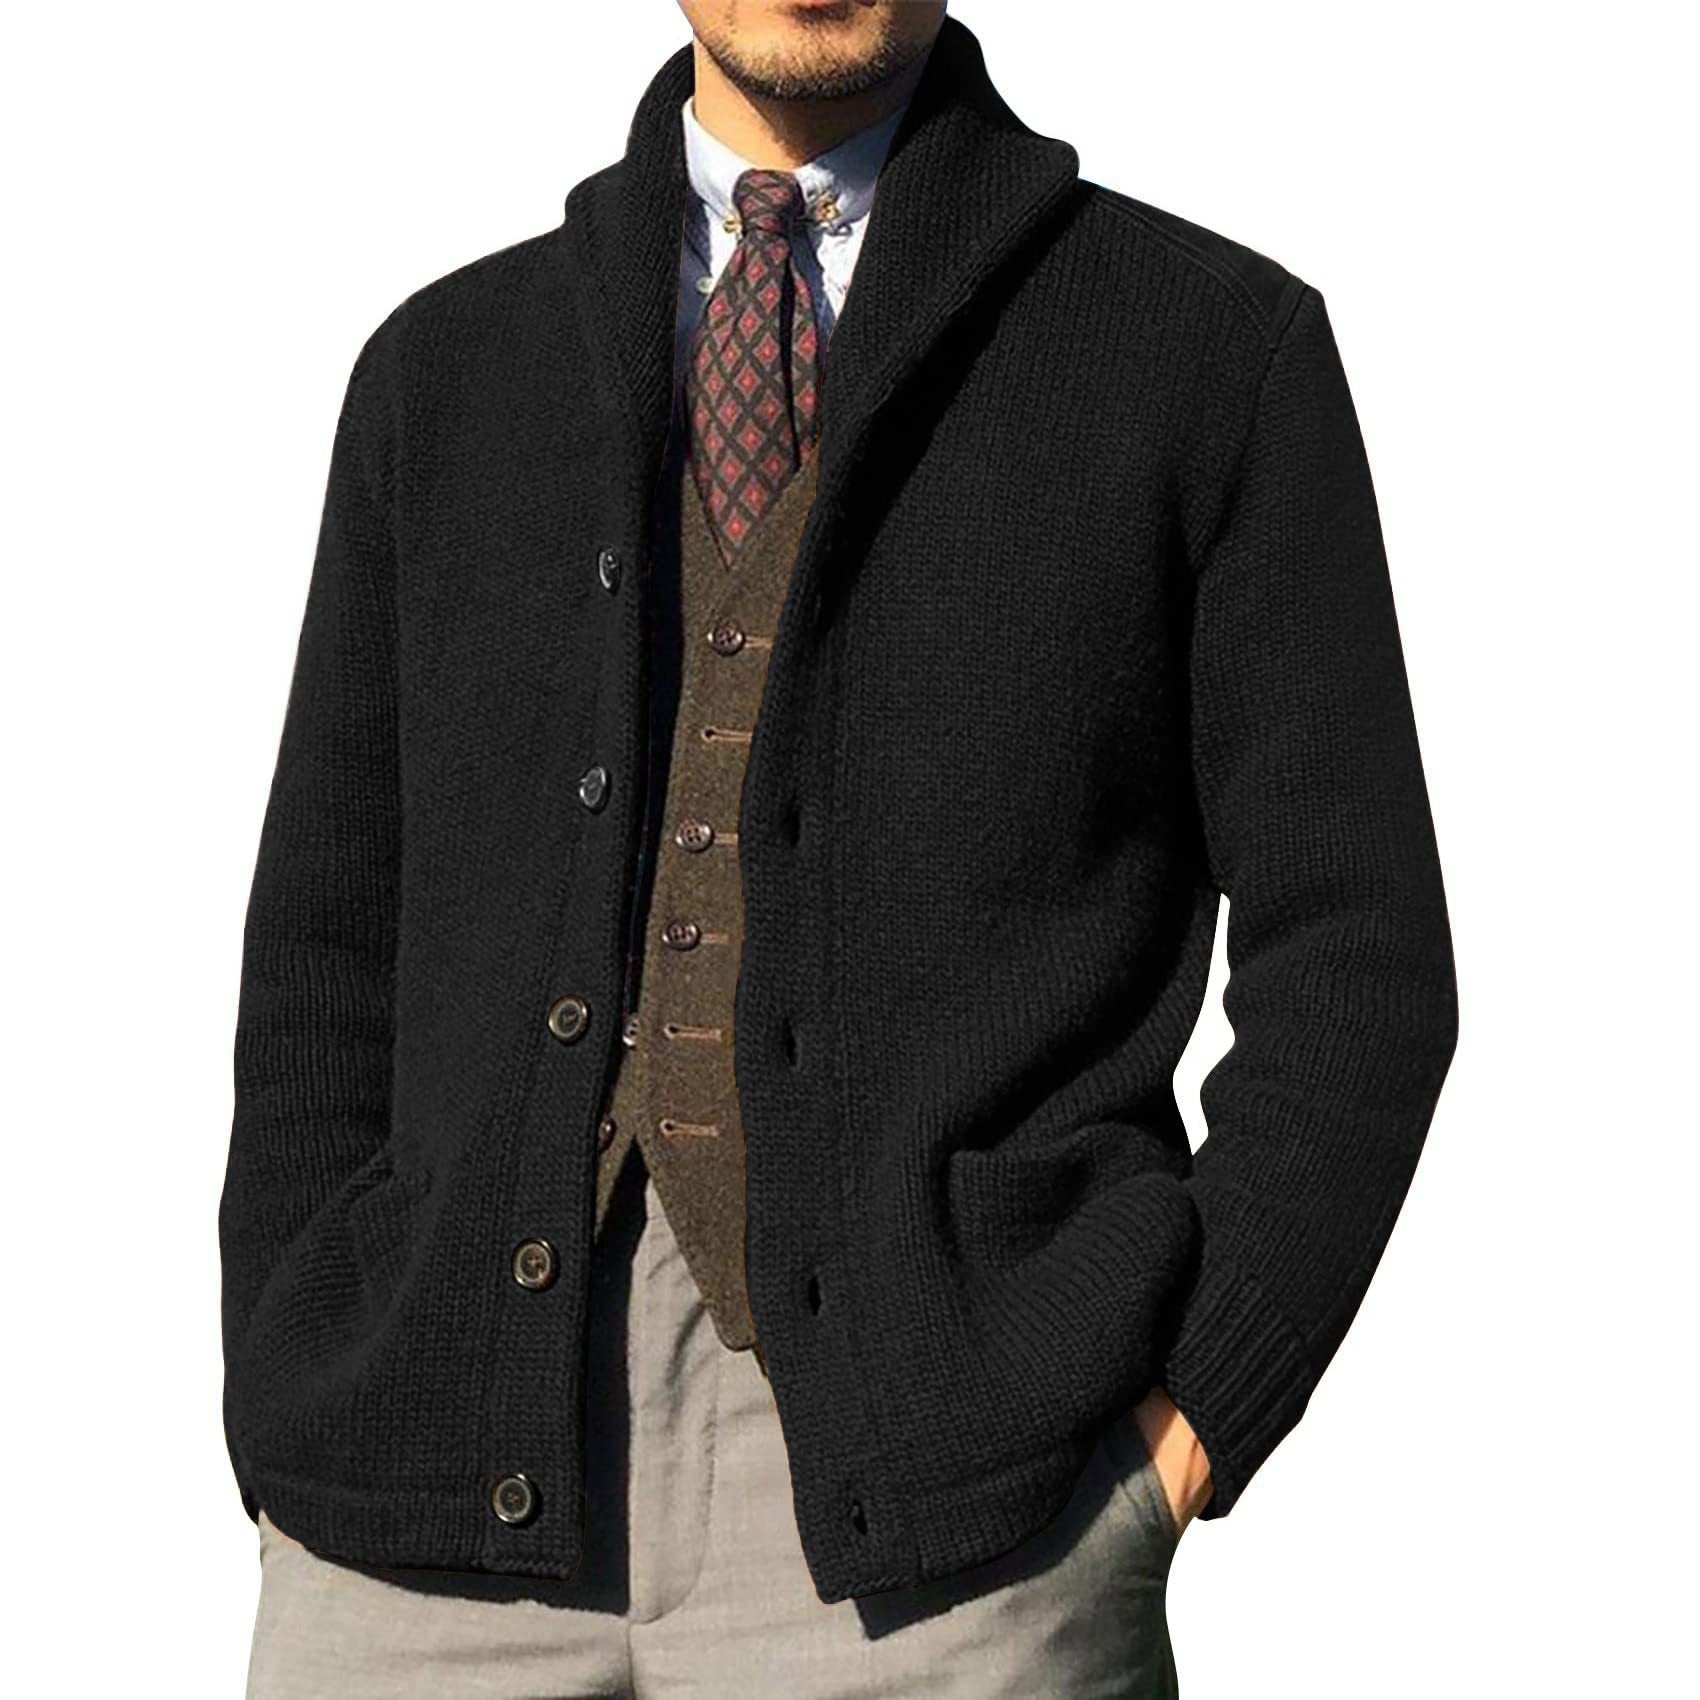 Men's Long Sleeve Sweater - Everyday-Sales.com